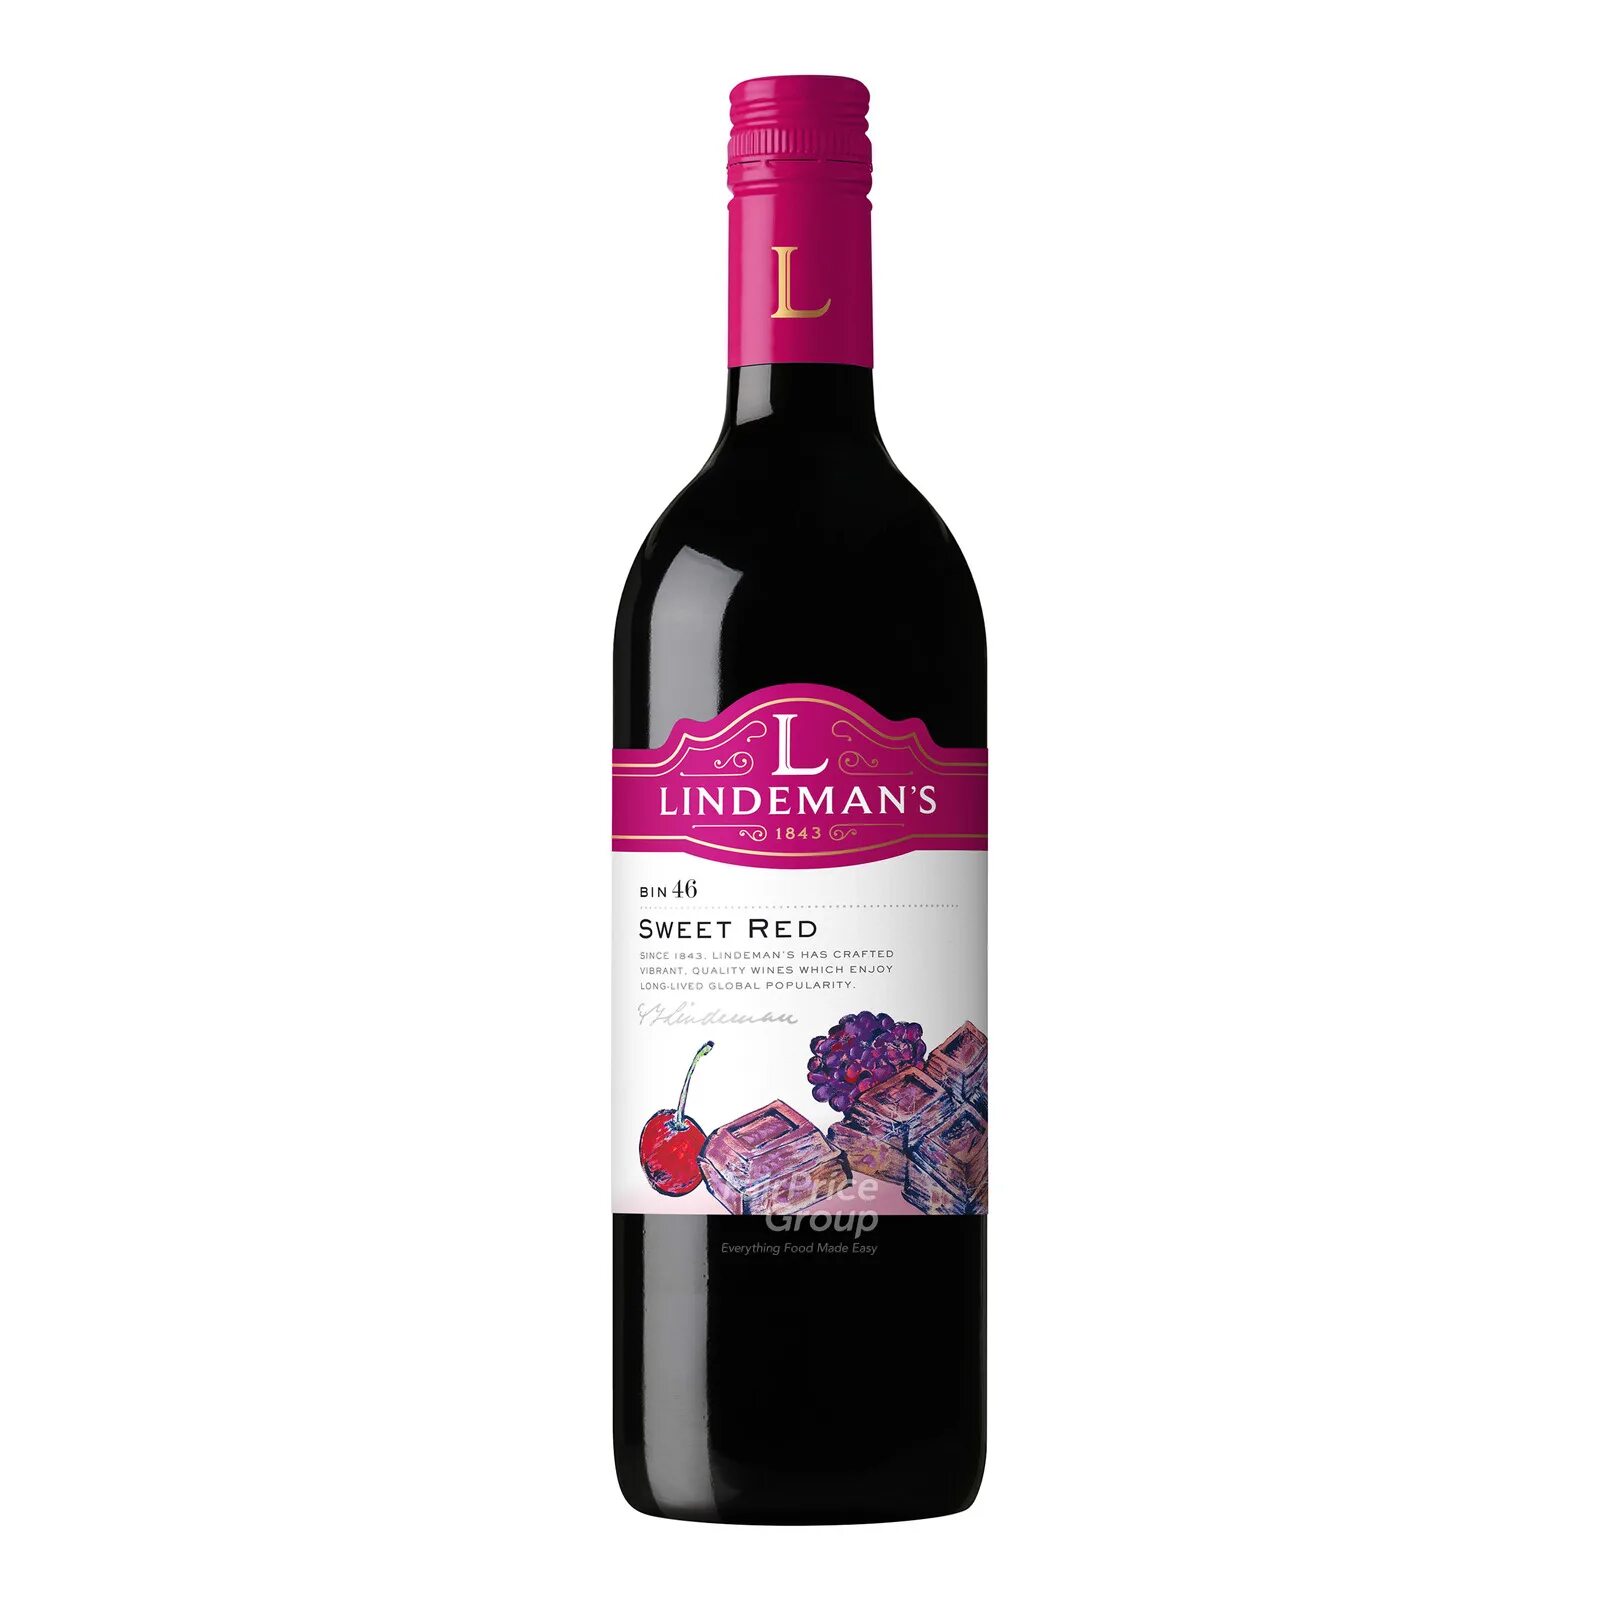 Сладкое вино в кб. Вино Lindeman's bin 45 Cabernet Sauvignon, 2018, 0.75 л. Вино Lindeman's bin 40 Merlot, 2017, 0.75 л. Линдеманс Шираз. Вино Lindeman's bin 45 Cabernet Sauvignon, 2017, 0.75 л.